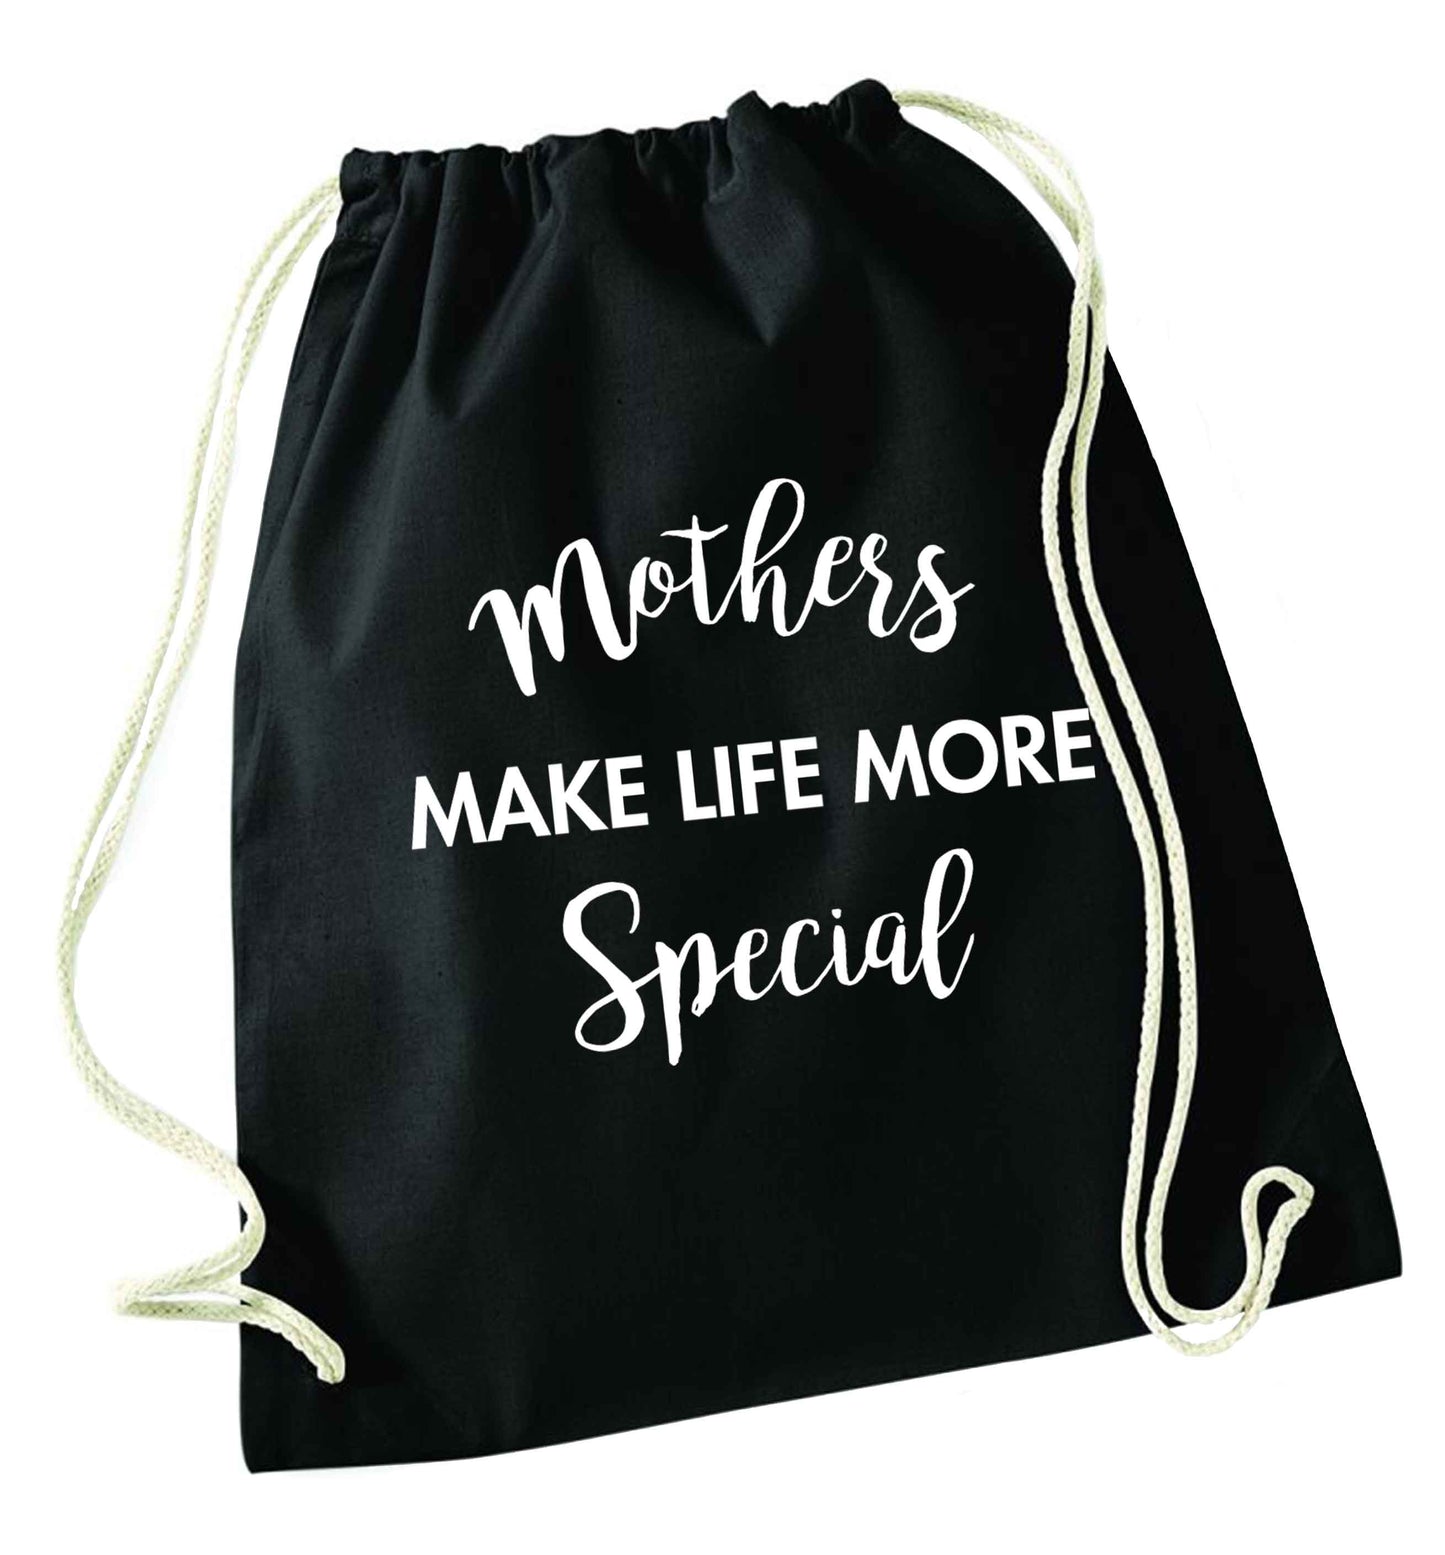 Mother's make life more special black drawstring bag